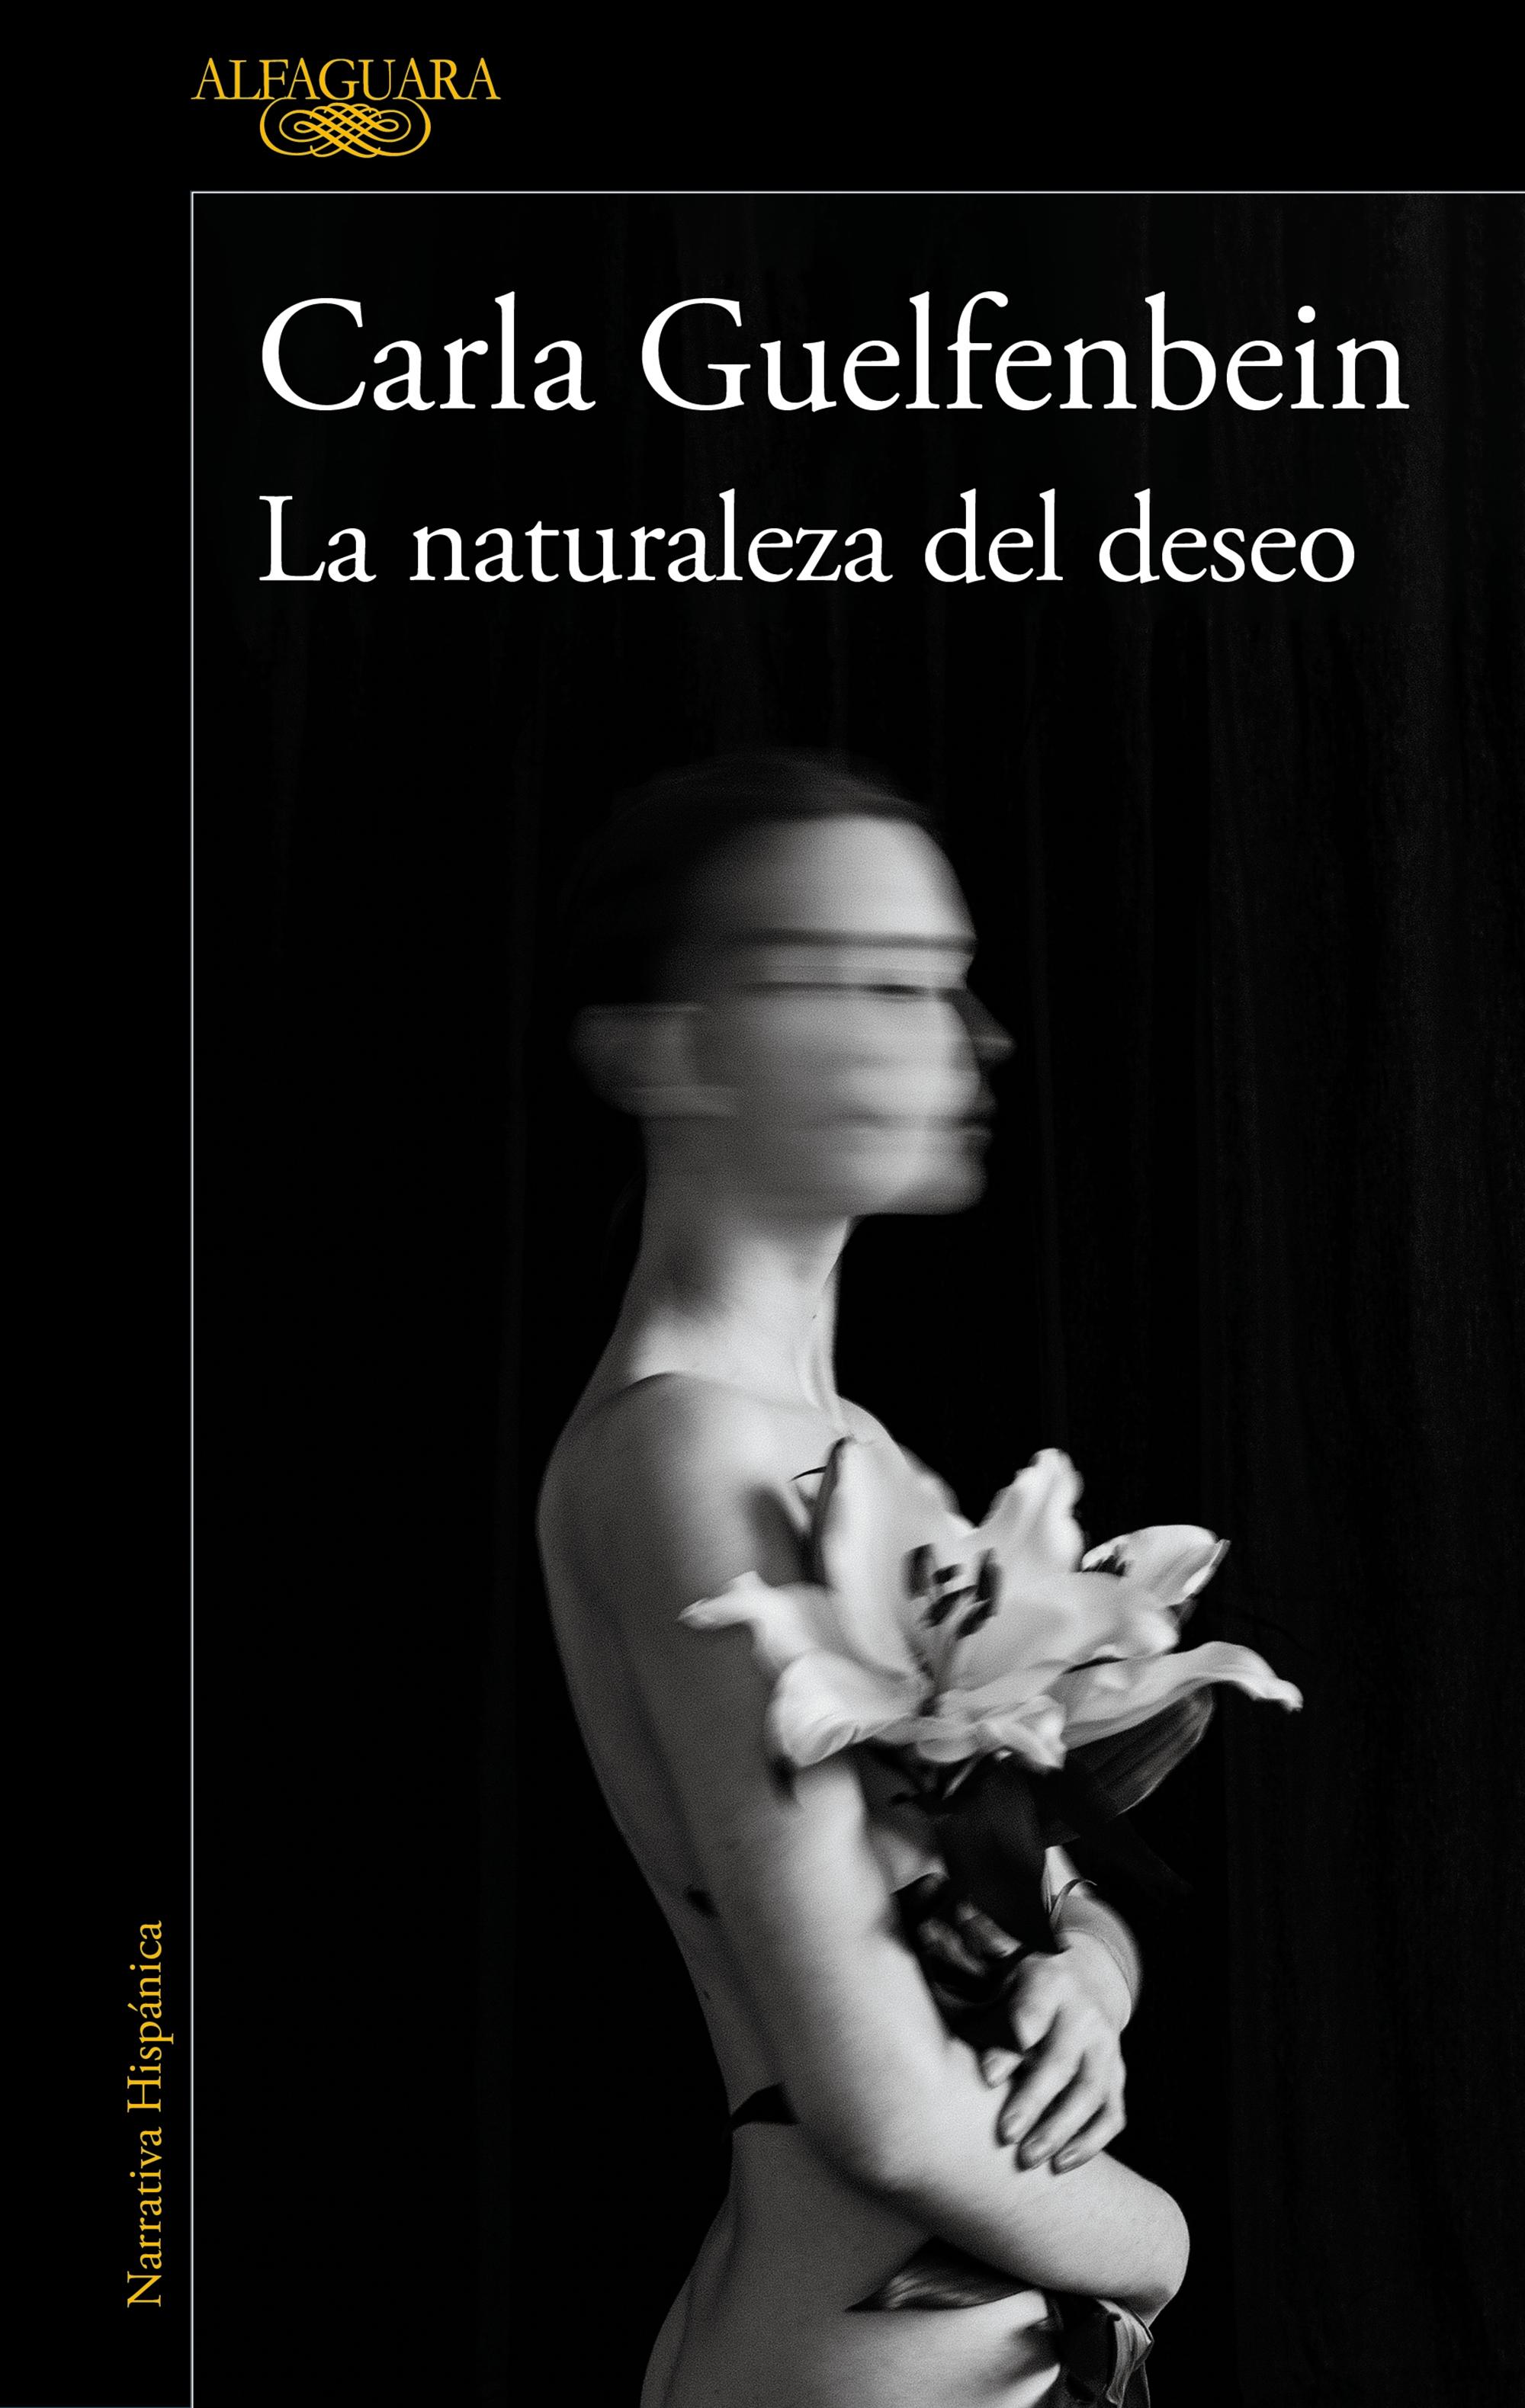 La Naturaleza del Deseo "La Nueva Novela de la Autora Ganadora del Premio Alfaguara"